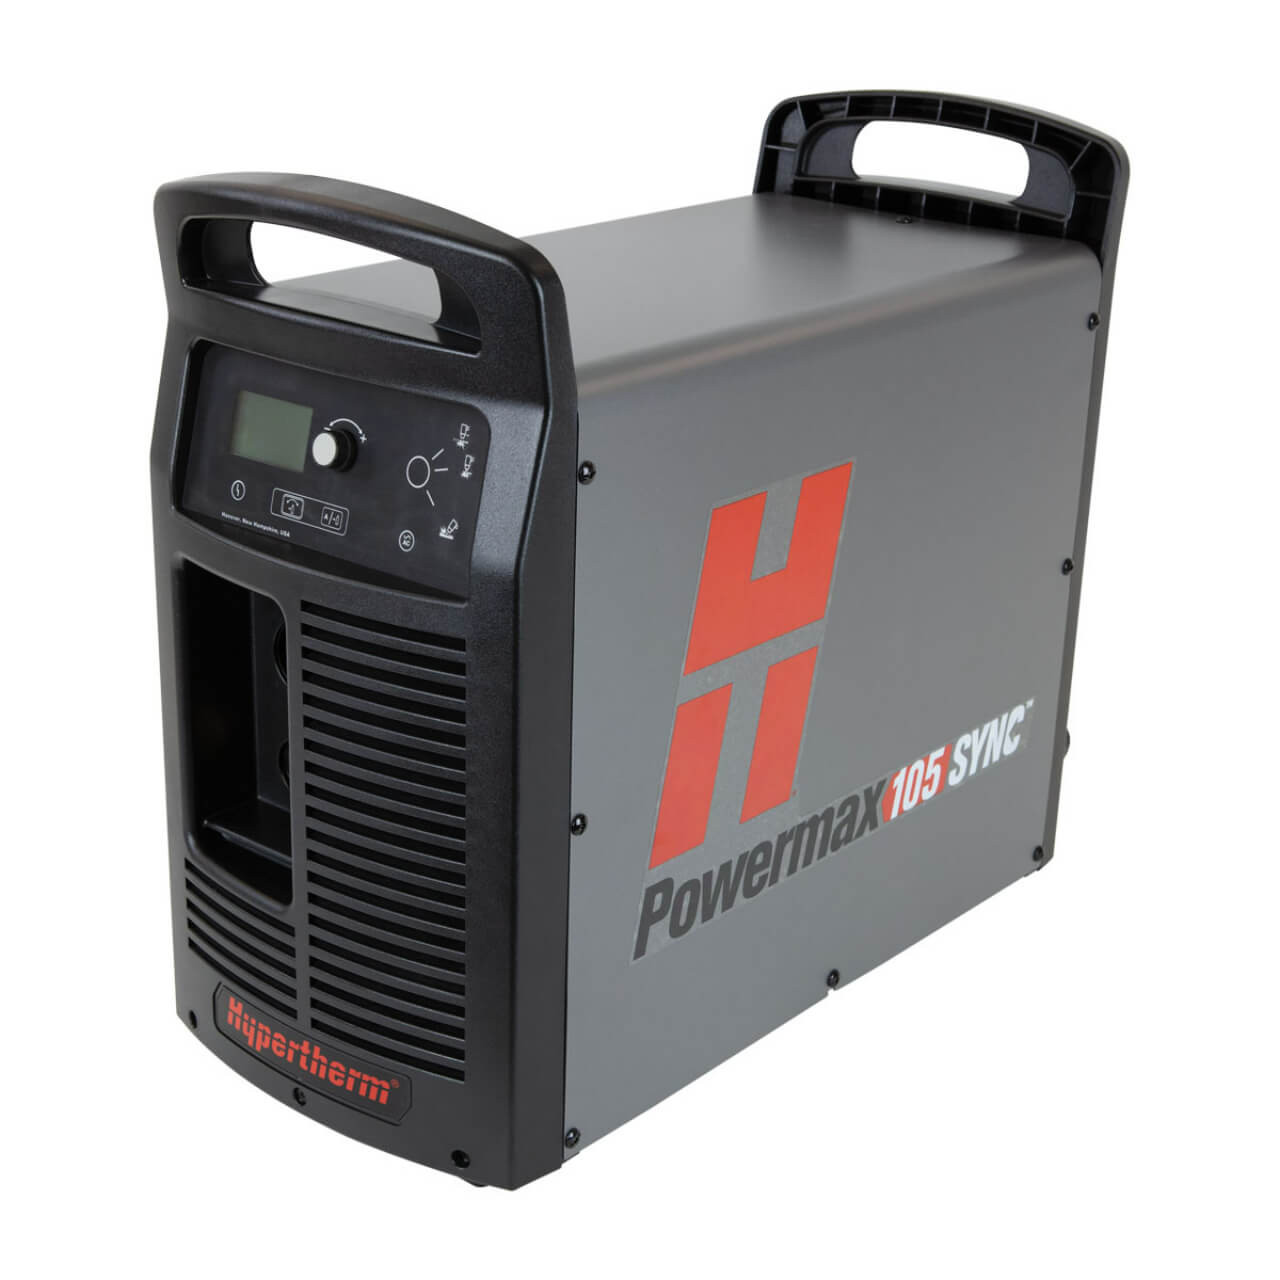 Hypertherm Powermax105 SYNC Power Source 415V